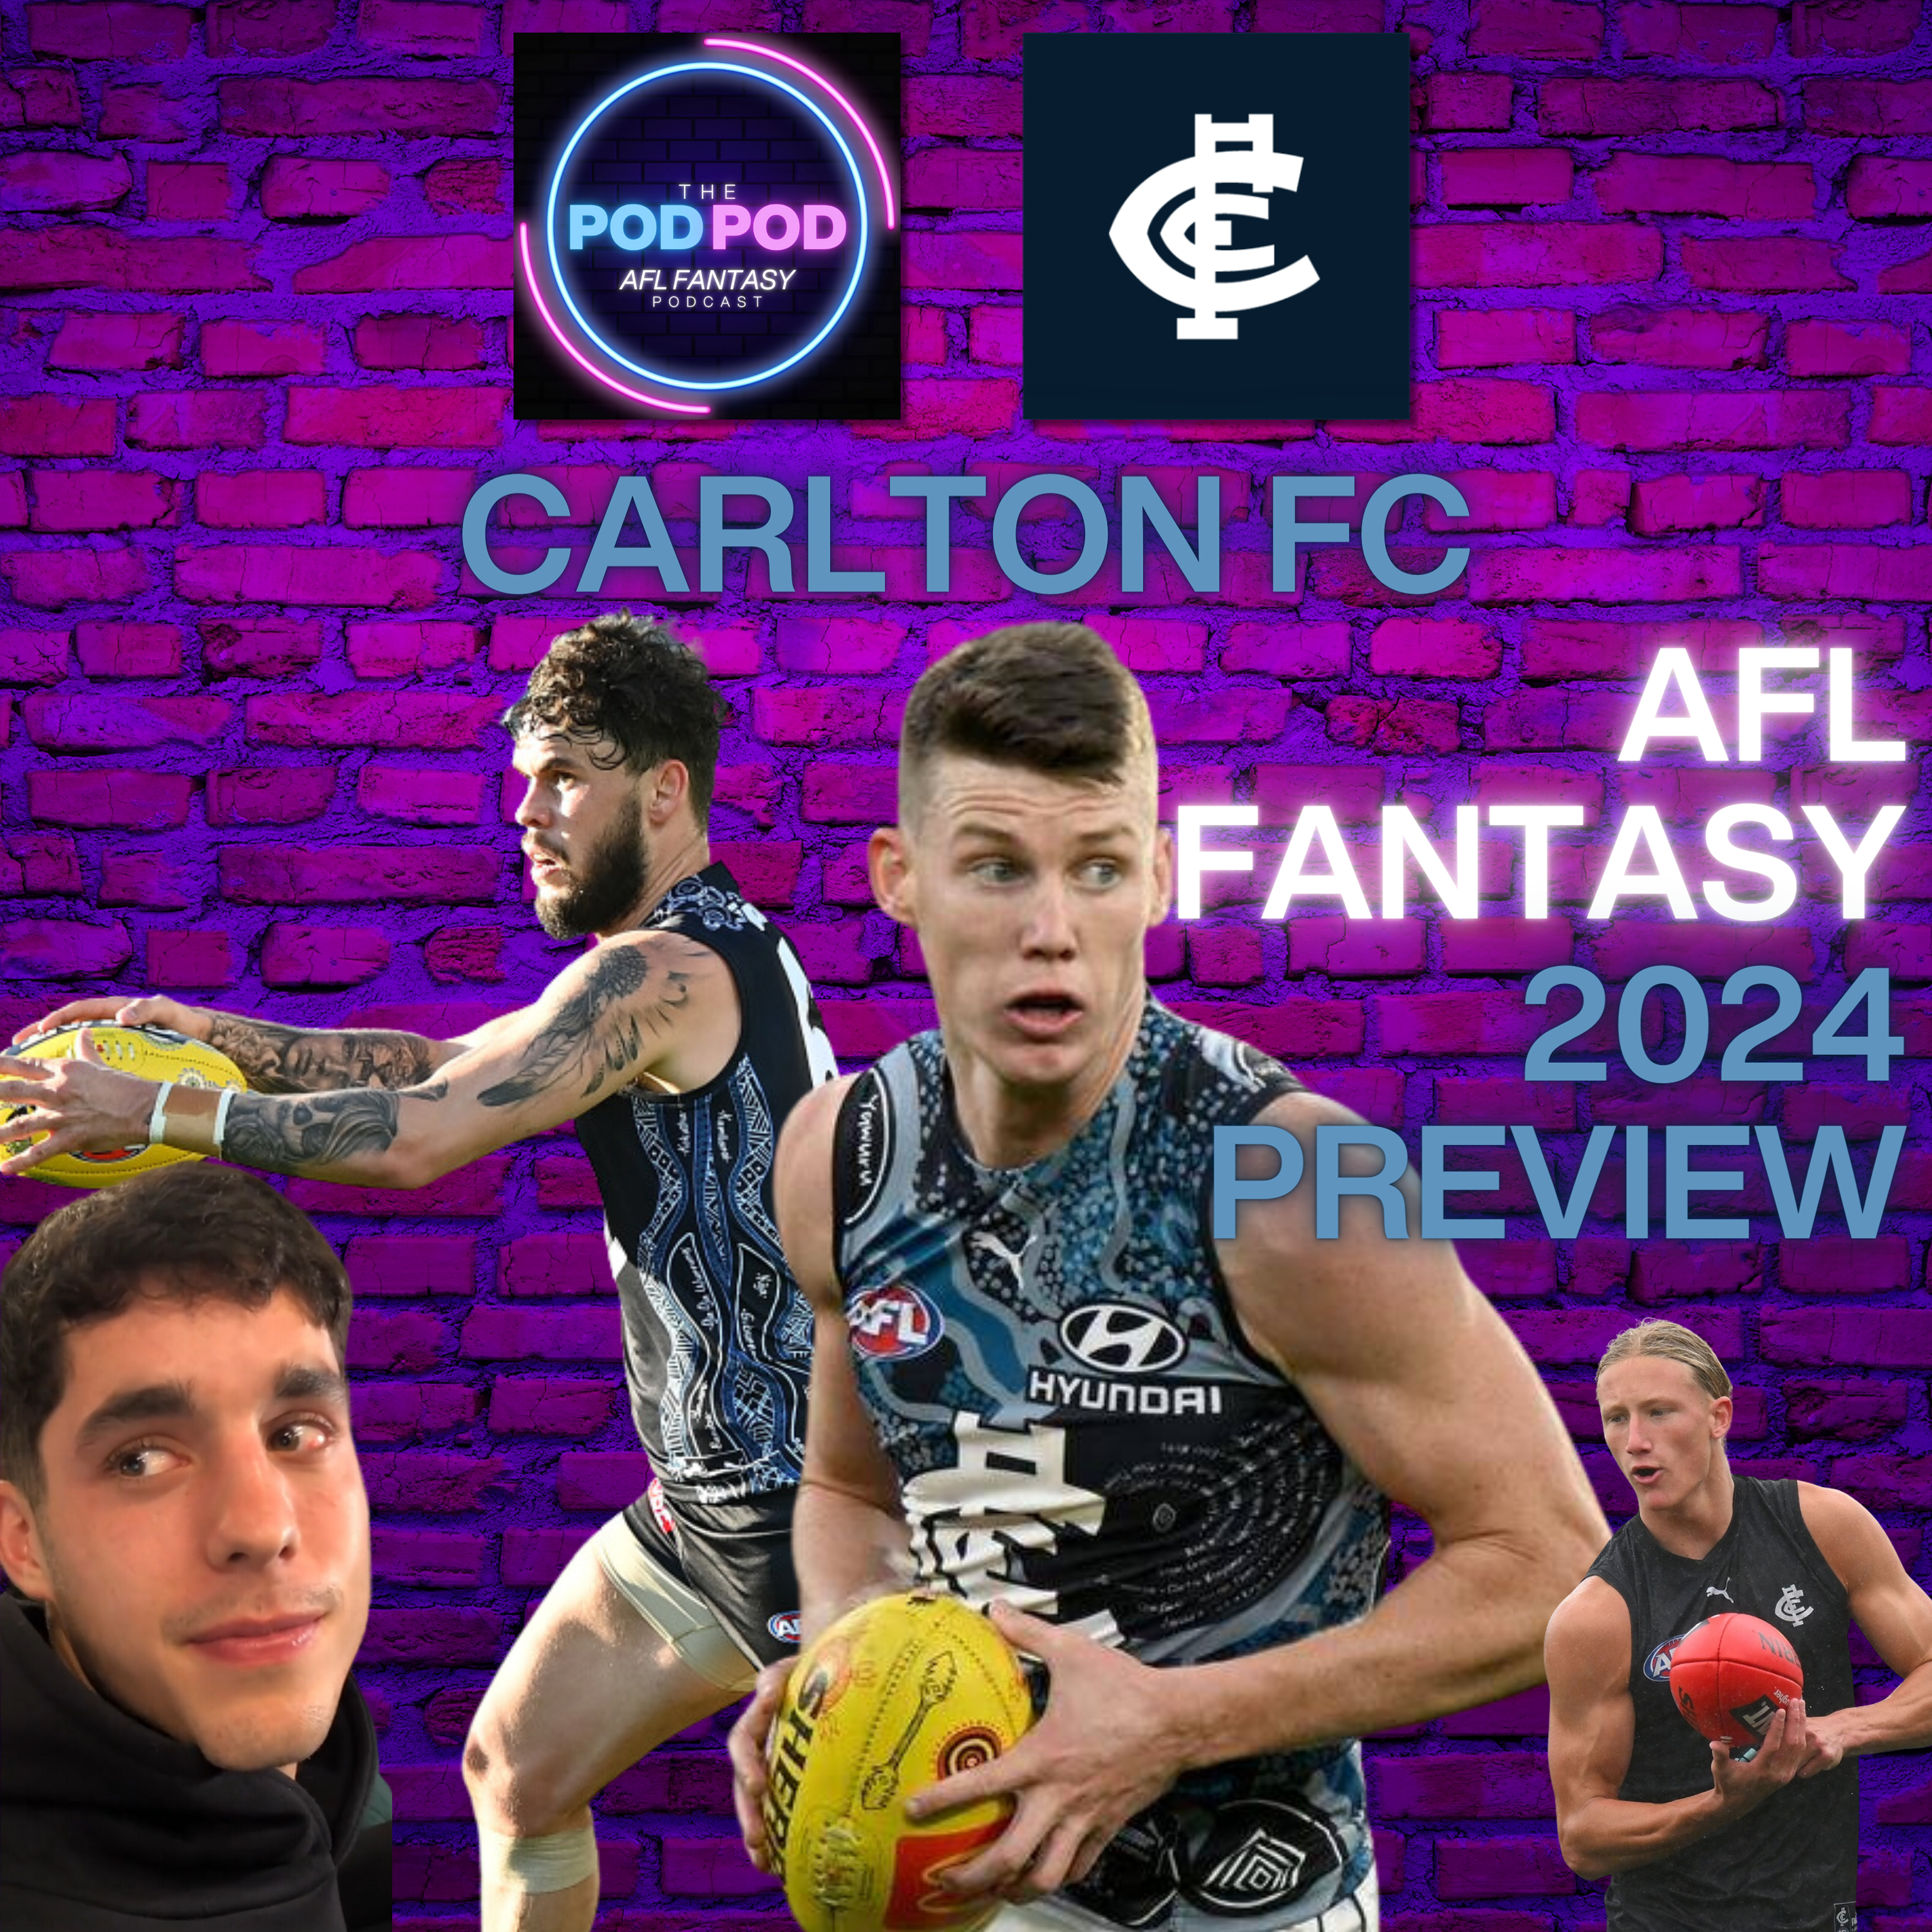 Carlton FC AFL Fantasy 2024 team preview | #PODPOD